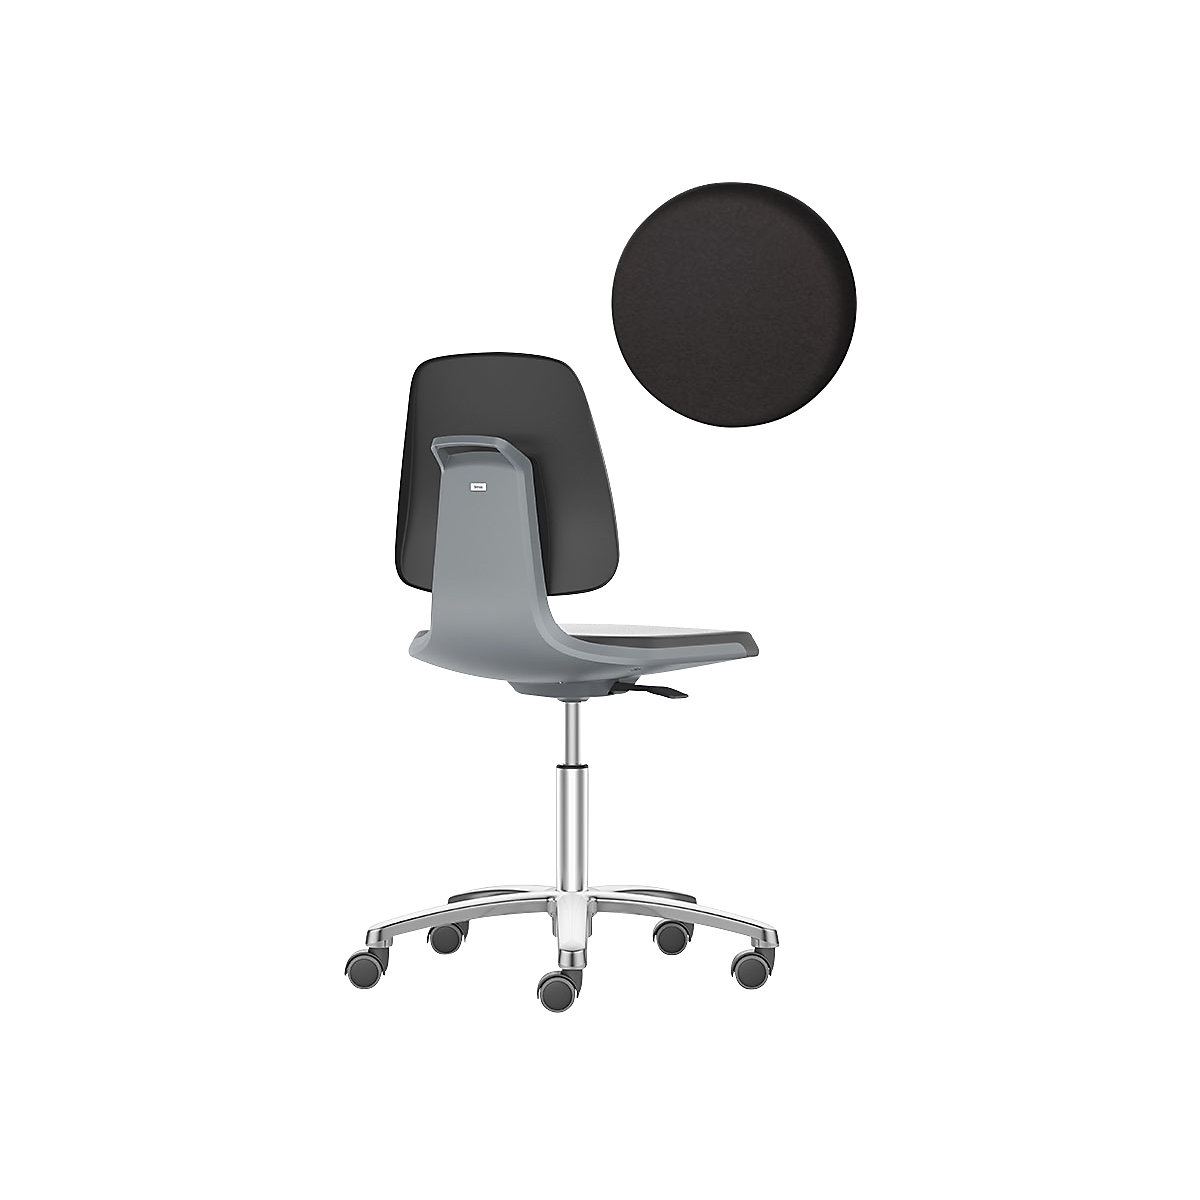 LABSIT industrial swivel chair – bimos, five-star base with castors, PU foam seat, charcoal-18